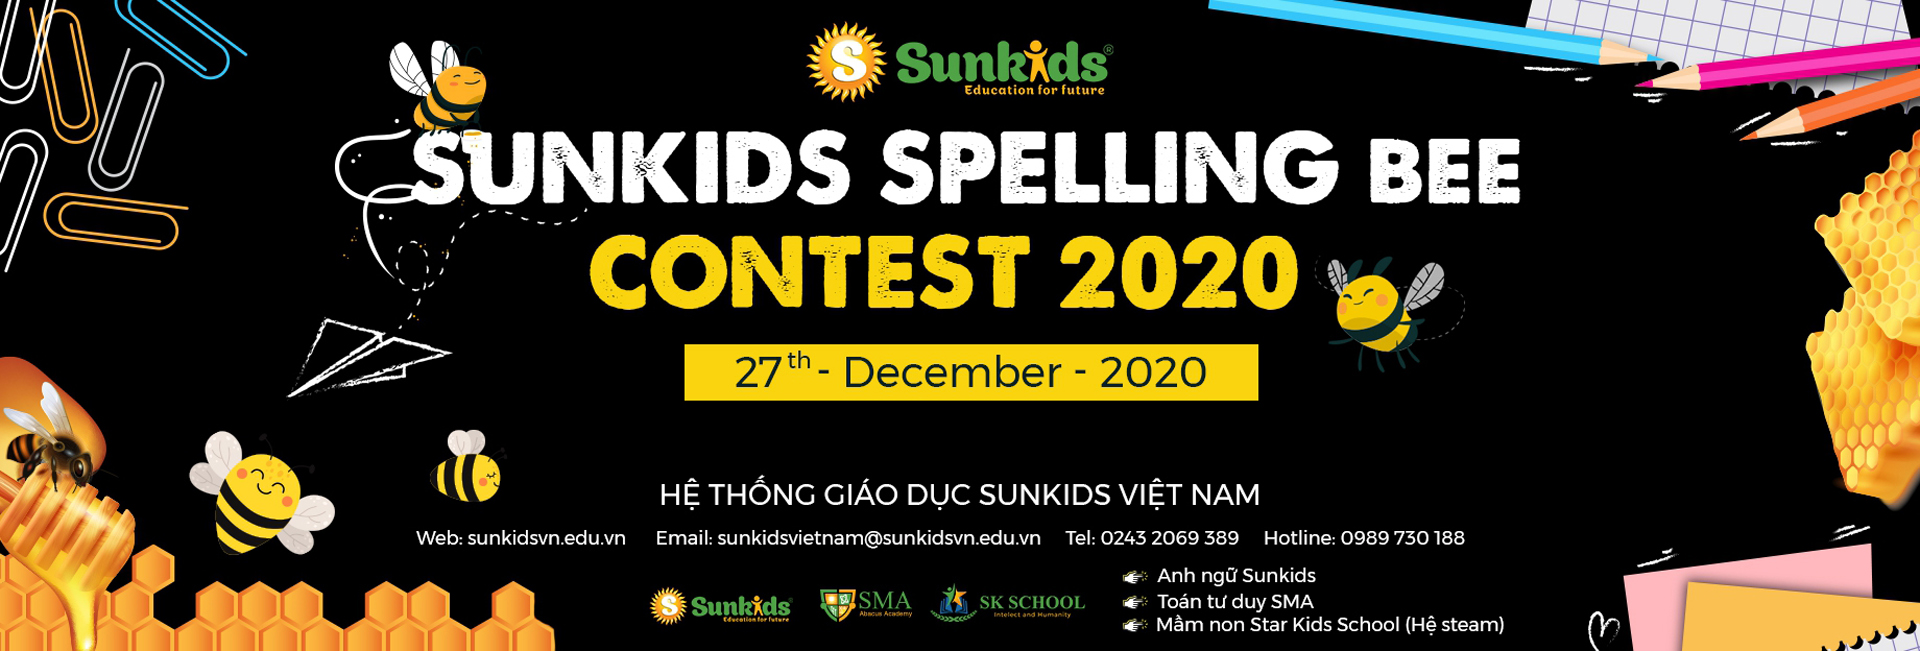 spelling-bee-contest-sunkids-2020-1-5832.jpg